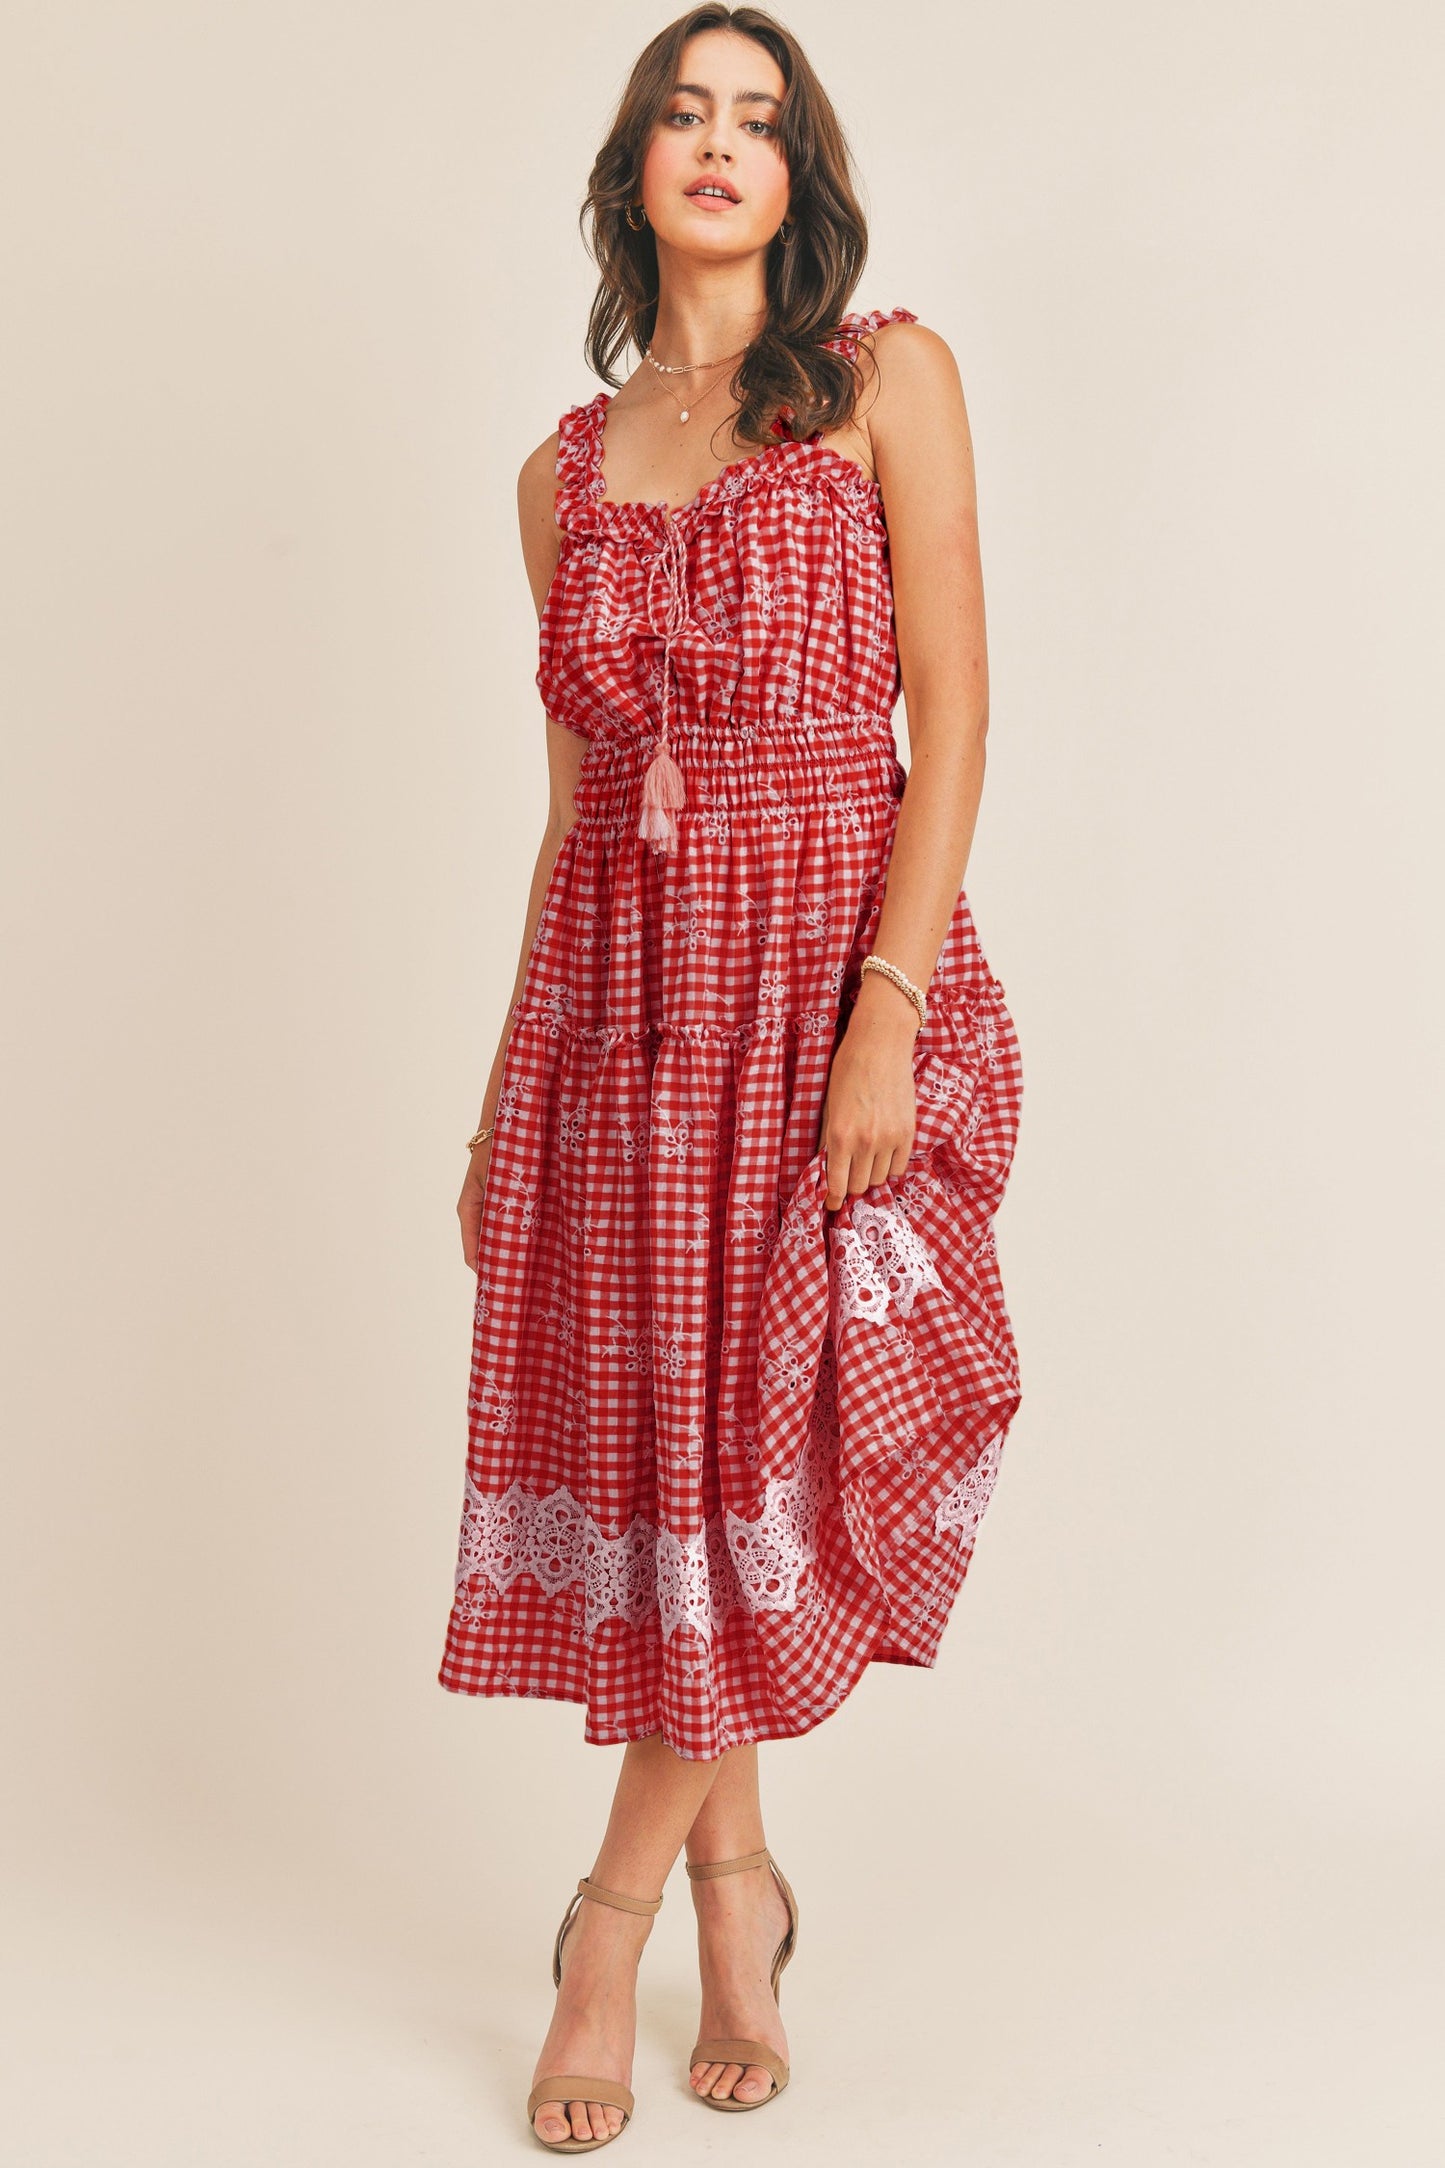 Zadie Dress in Red Gingham- Misses (S-L)